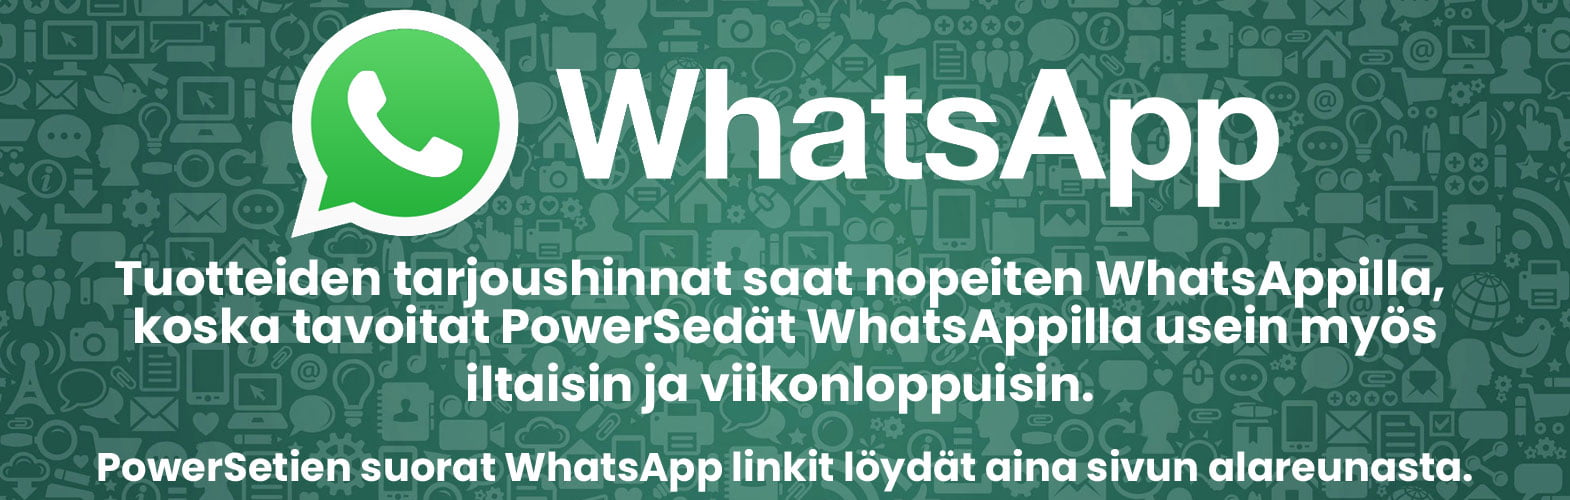 banner-whatsapp2